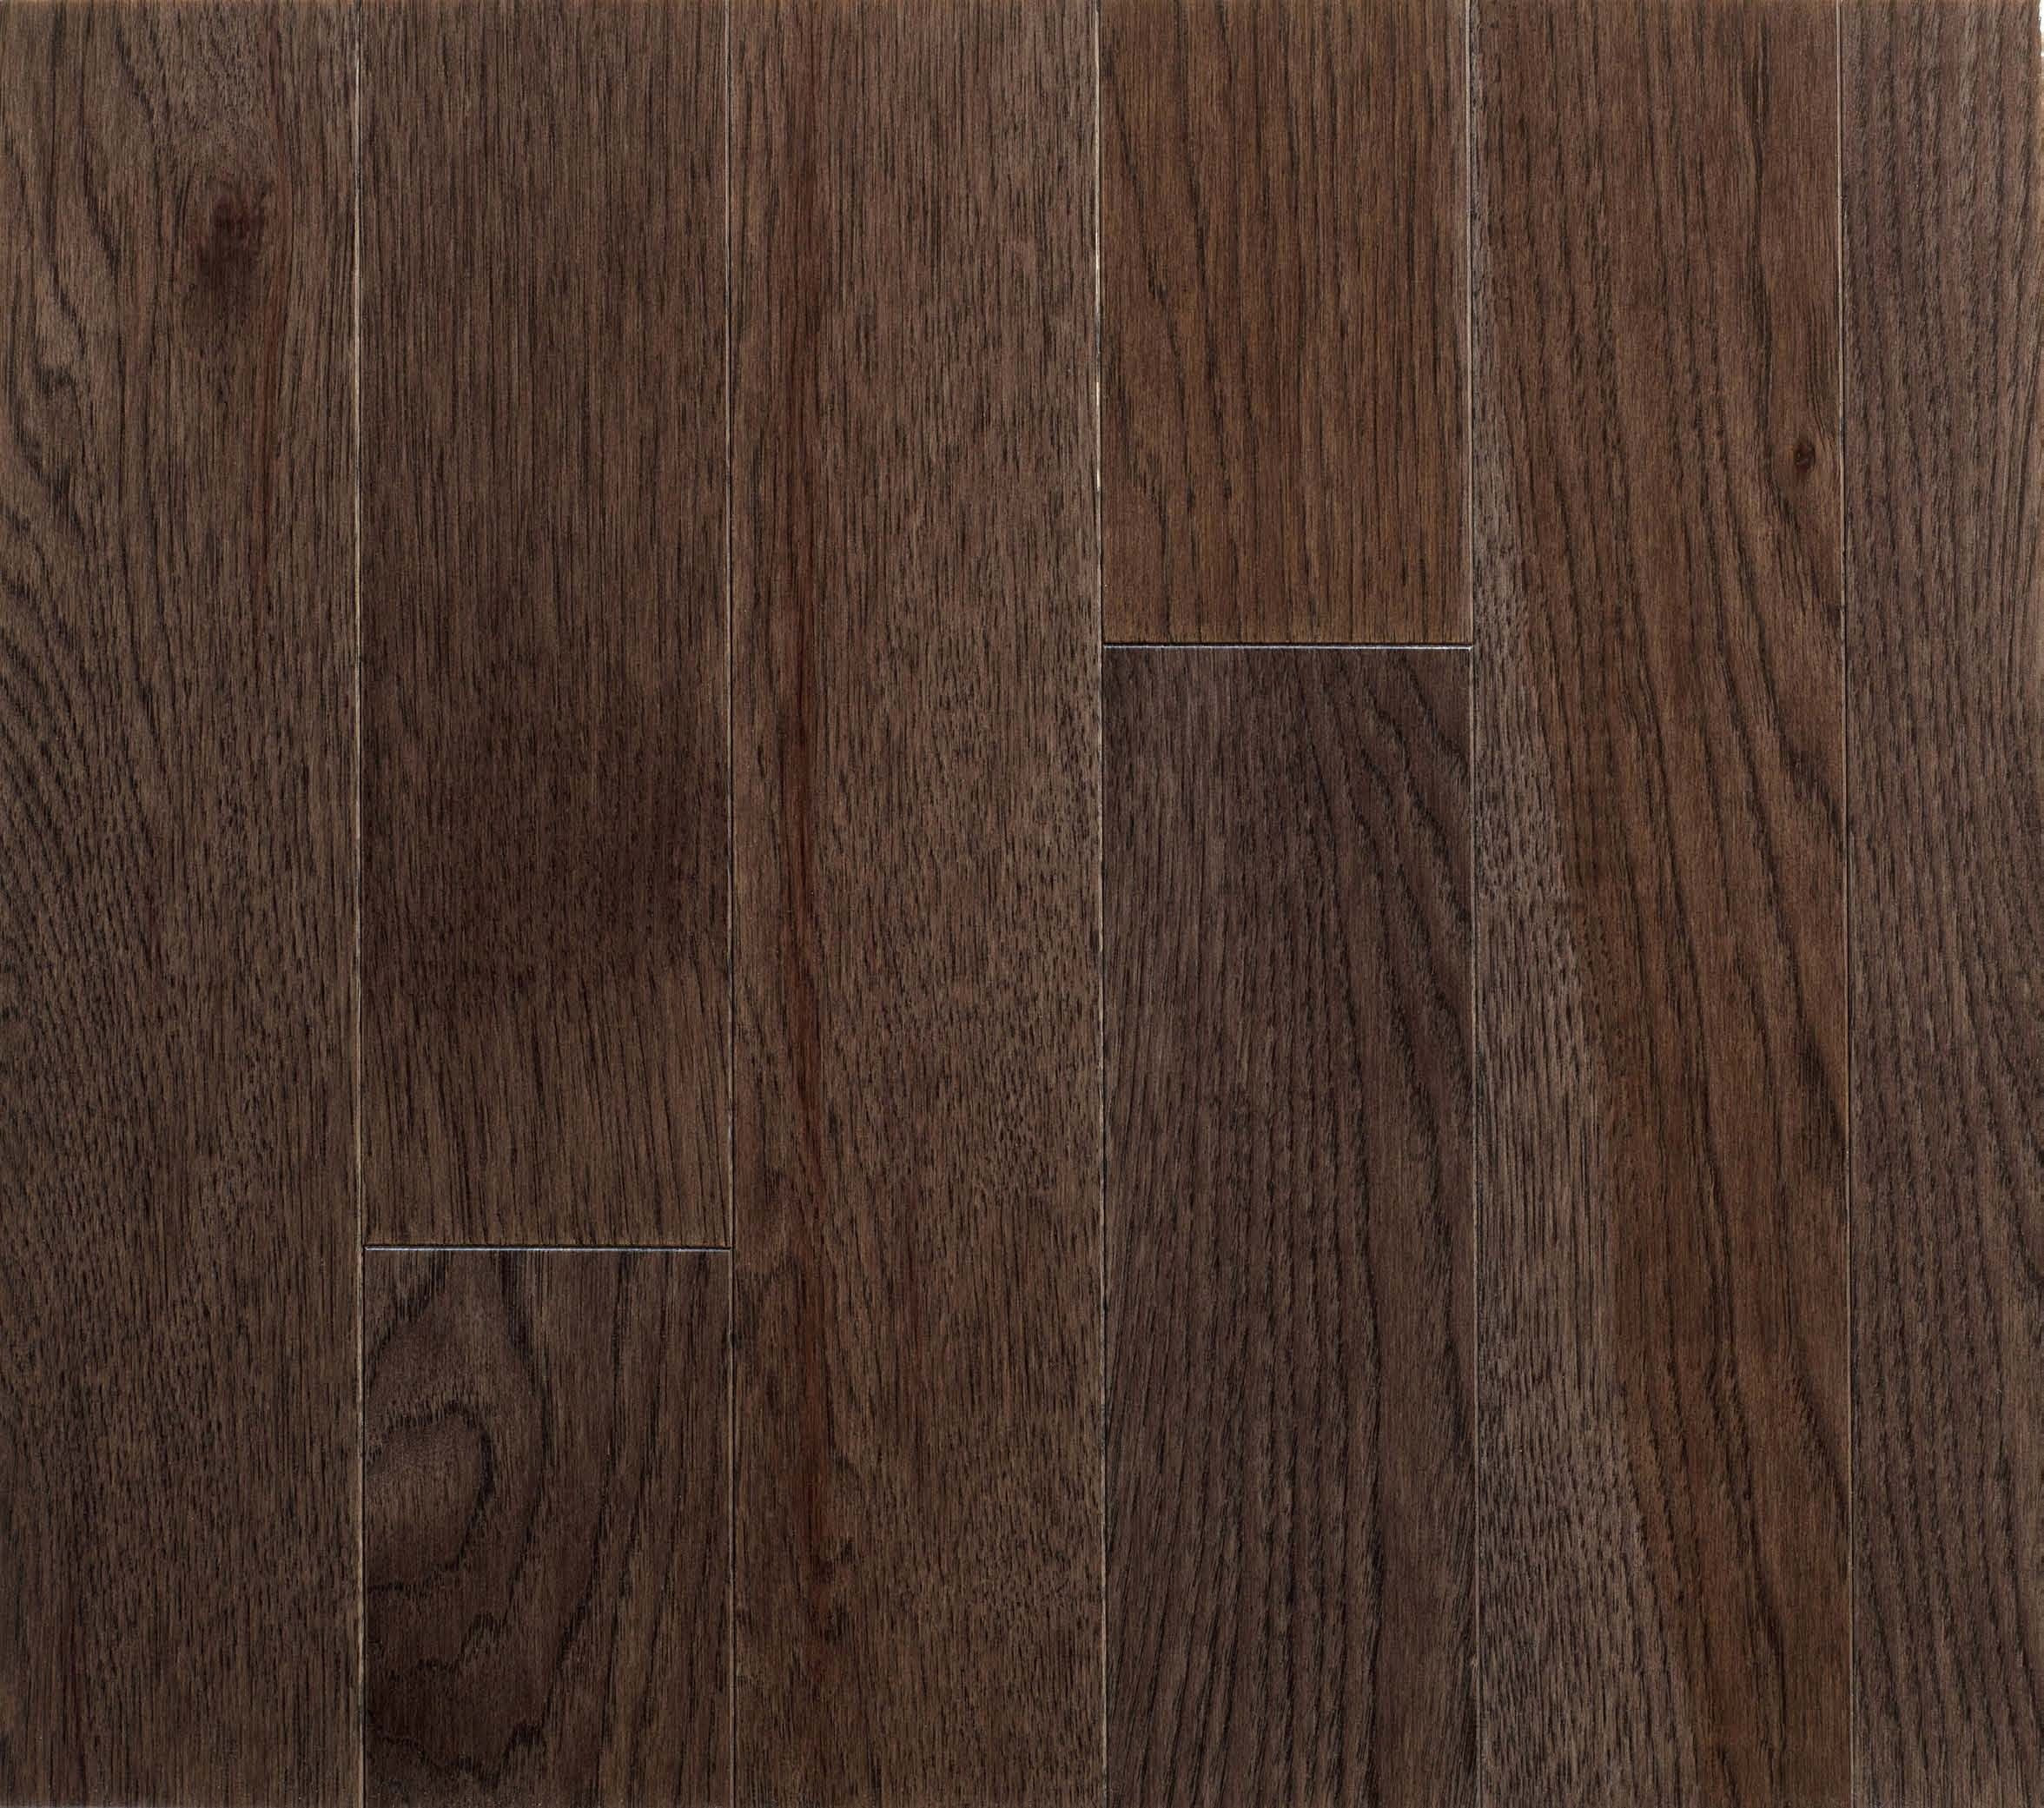 18 Stylish 1 1 4 Inch Hardwood Flooring 2024 free download 1 1 4 inch hardwood flooring of hickory mesquite by vintage hardwood flooring hardwood in hickory mesquite by vintage hardwood flooring hardwood hardwoodflooring hickory pecan